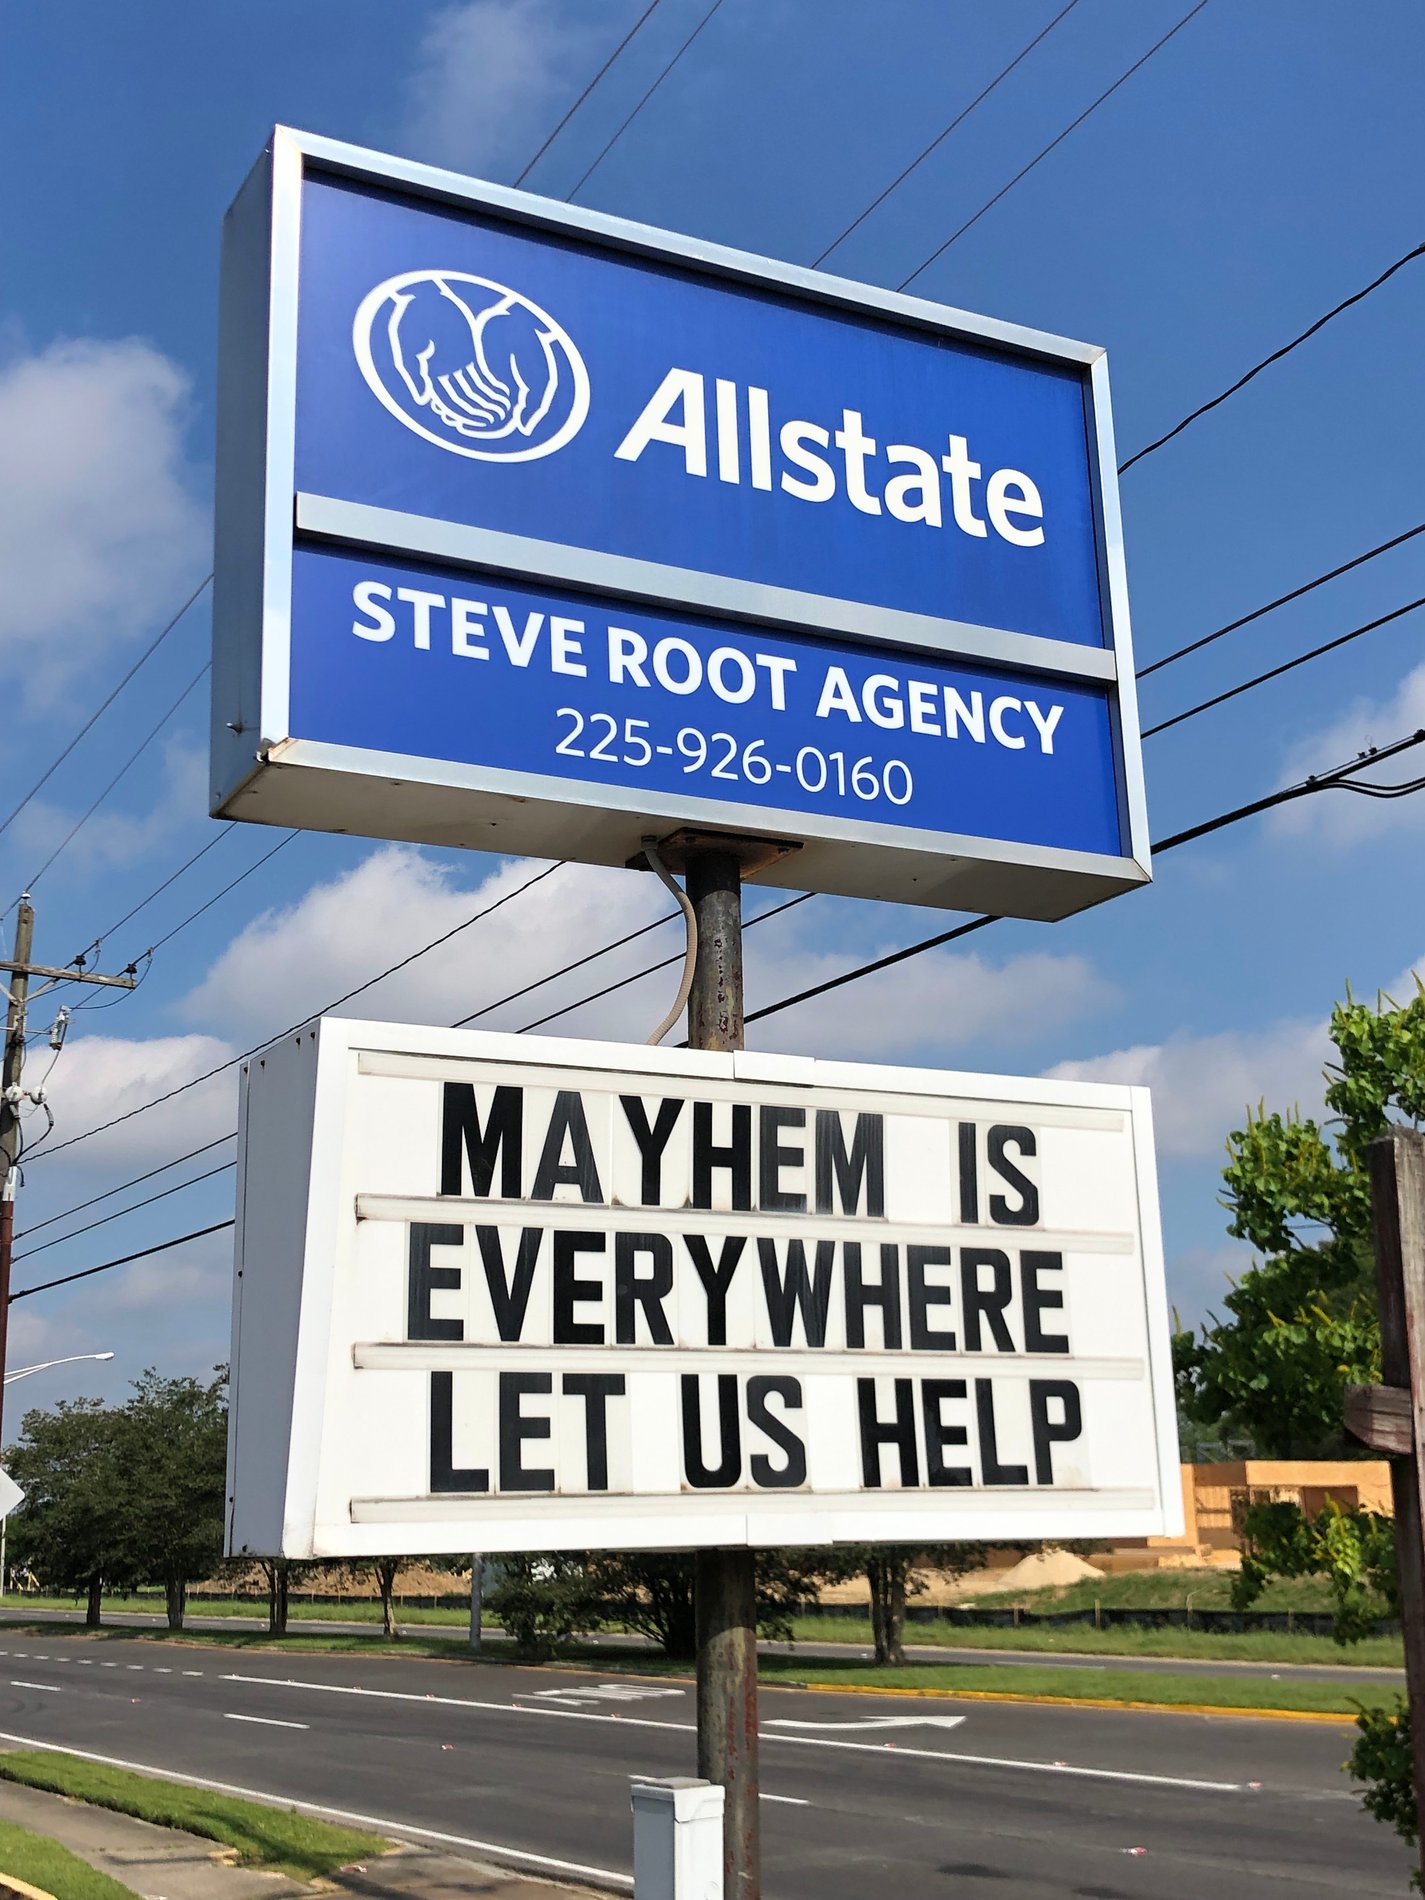 Steve Root - Allstate Insurance Agent In Baton Rouge, La